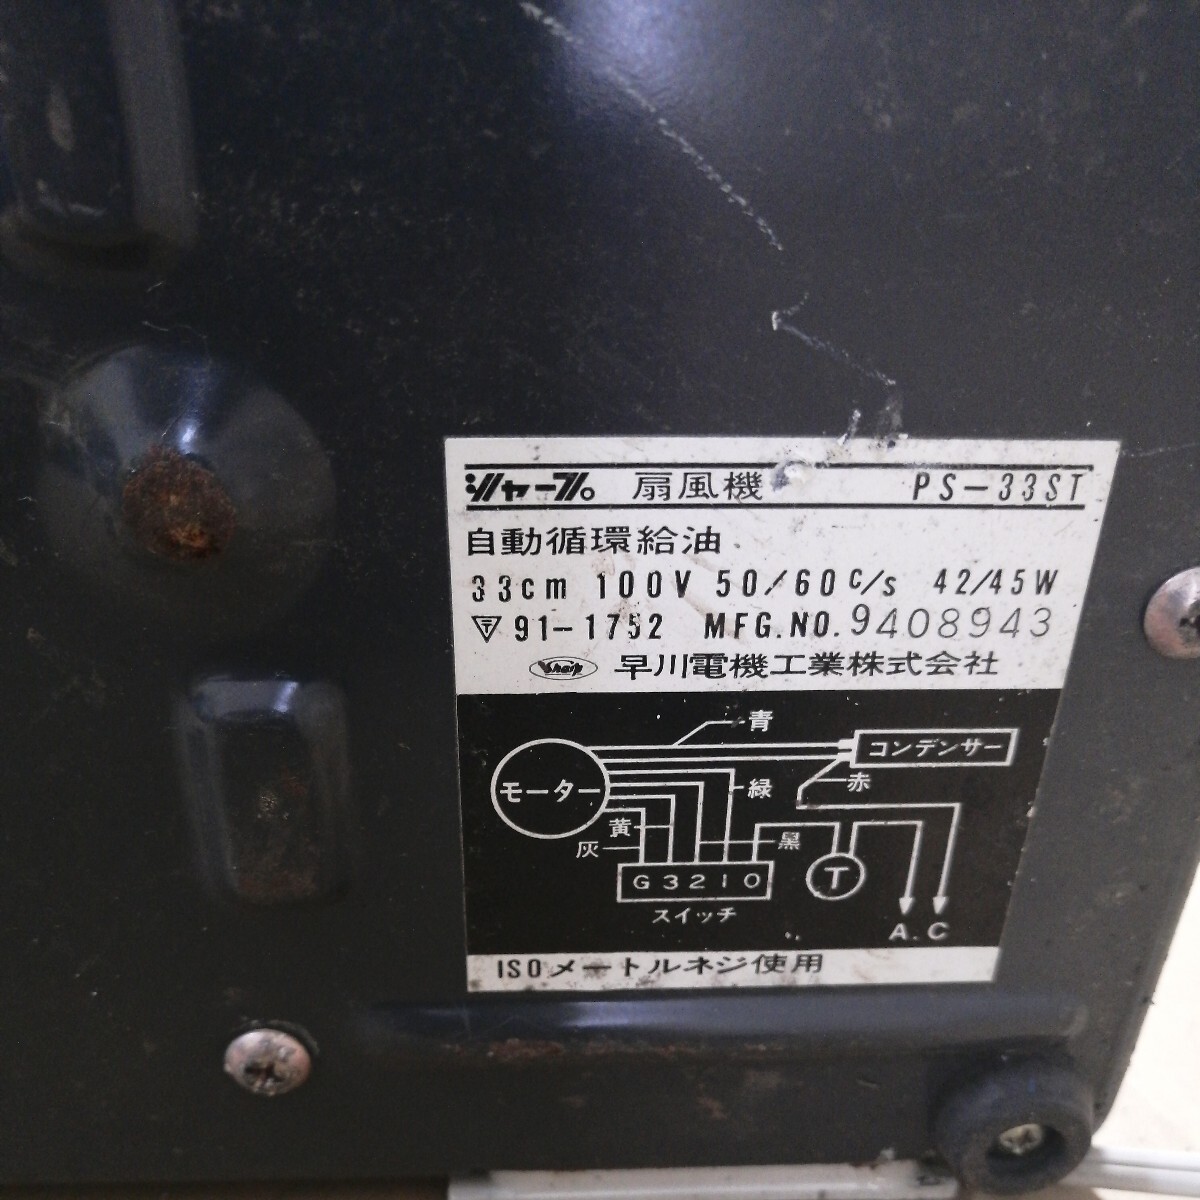  electrification verification settled SHARP sharp ps-33st cool size33 electric fan Showa Retro antique junk 50809w